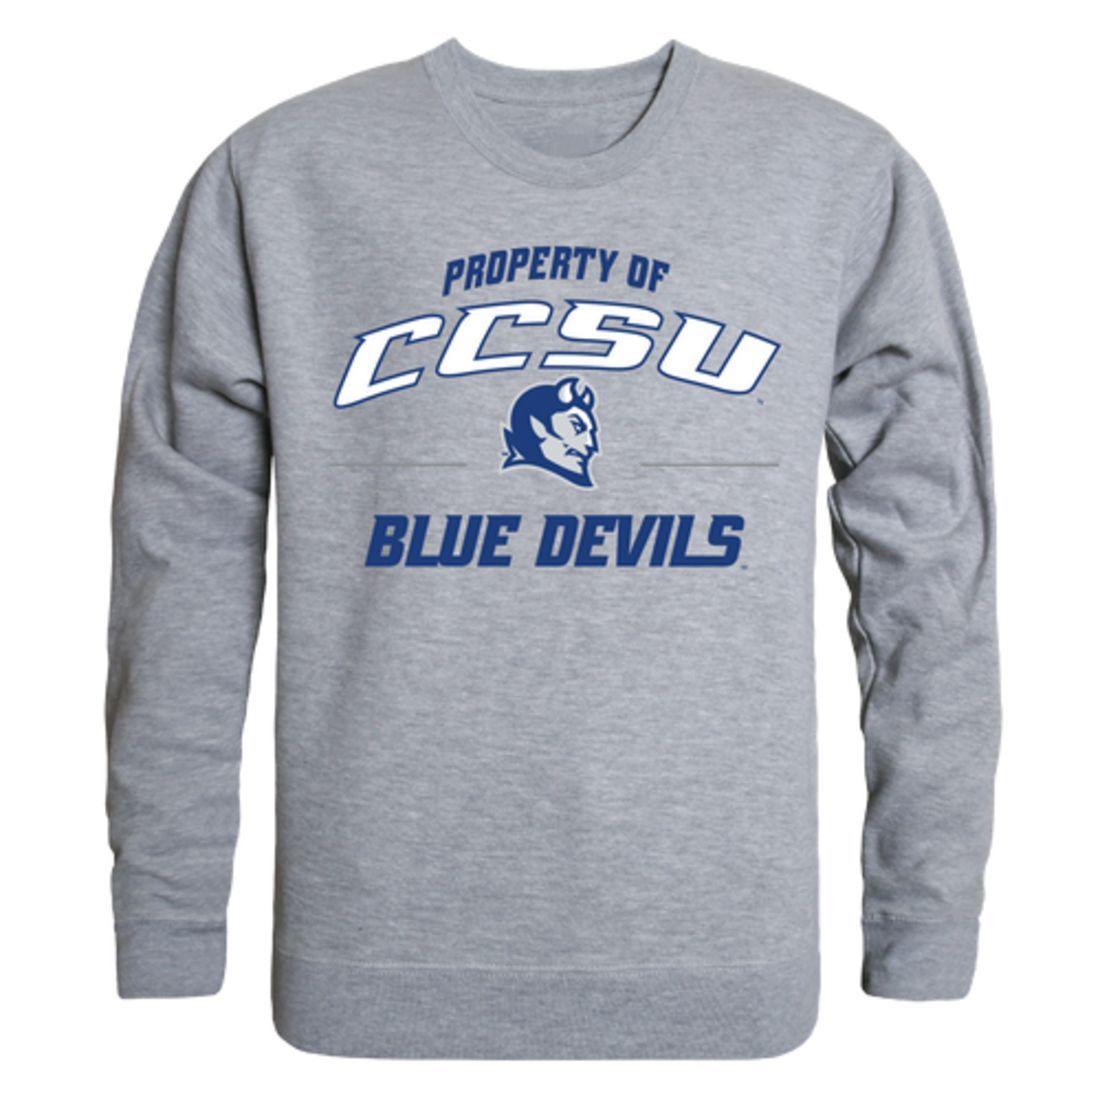 CCSU Central Connecticut State University Blue Devils Property Crewneck Pullover Sweatshirt Sweater Heather Grey-Campus-Wardrobe